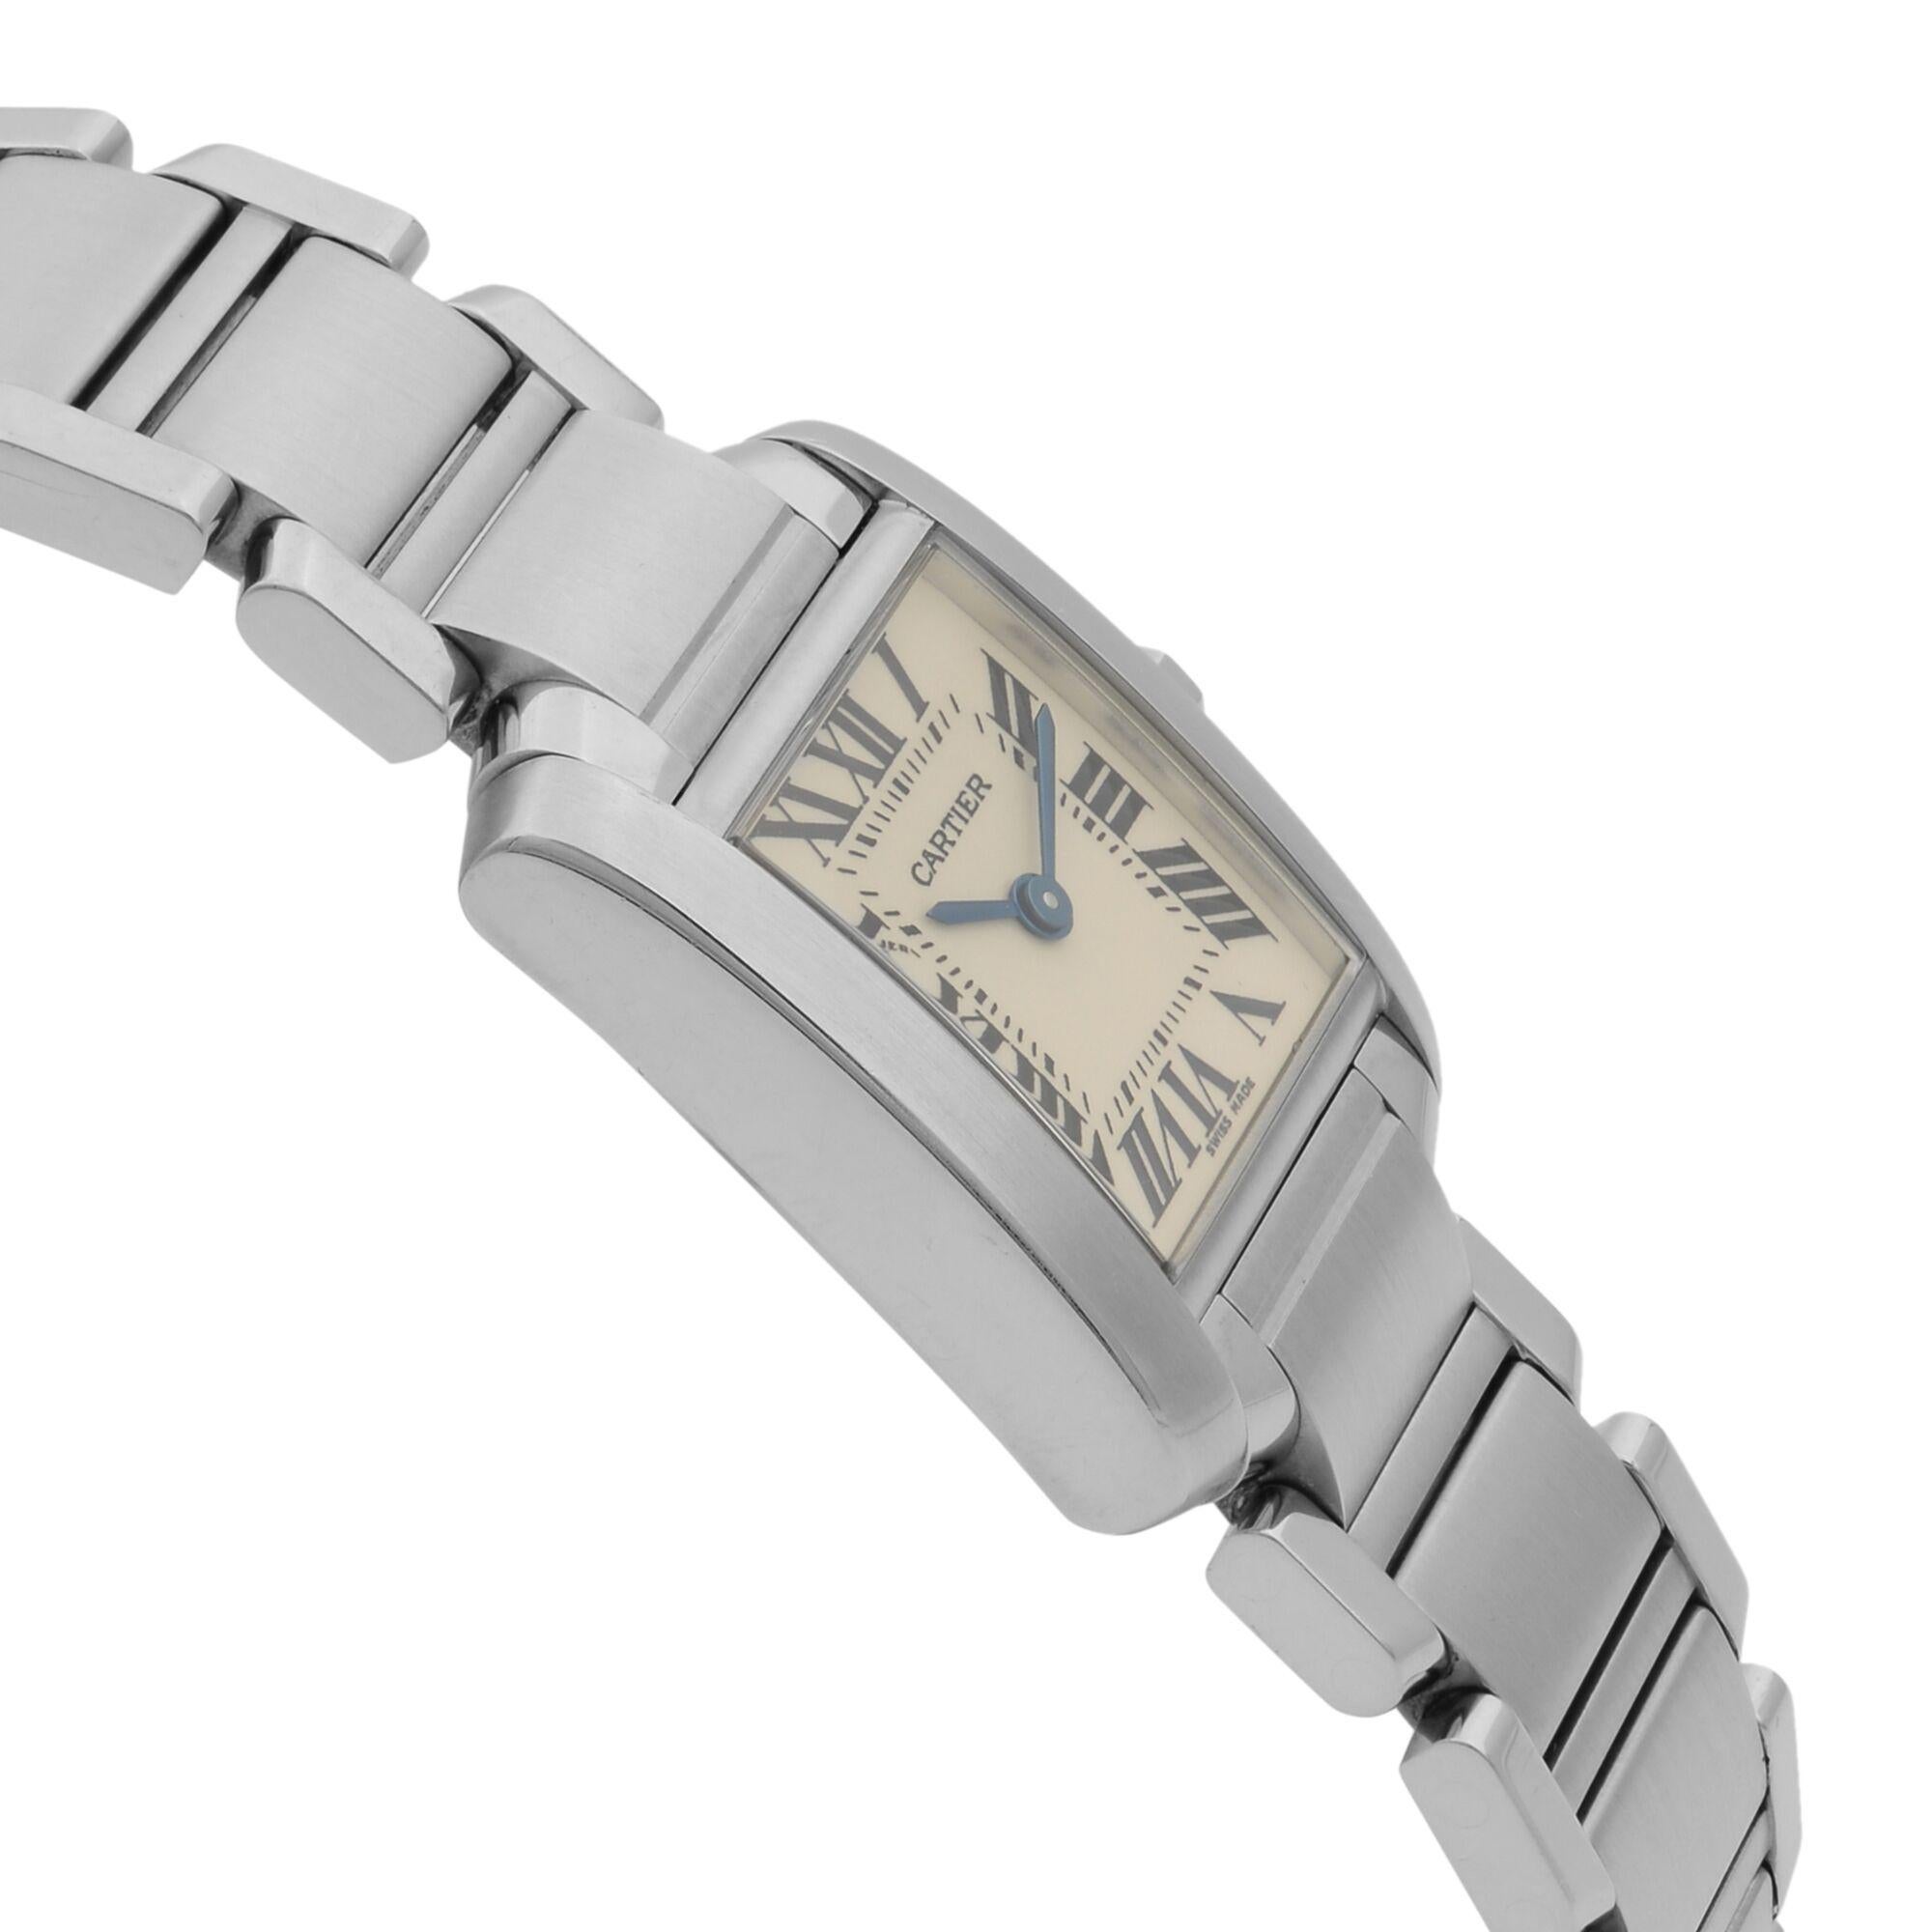 Cartier Tank Francaise Small Steel White Dial Quartz Women's Watch W51008Q3 1